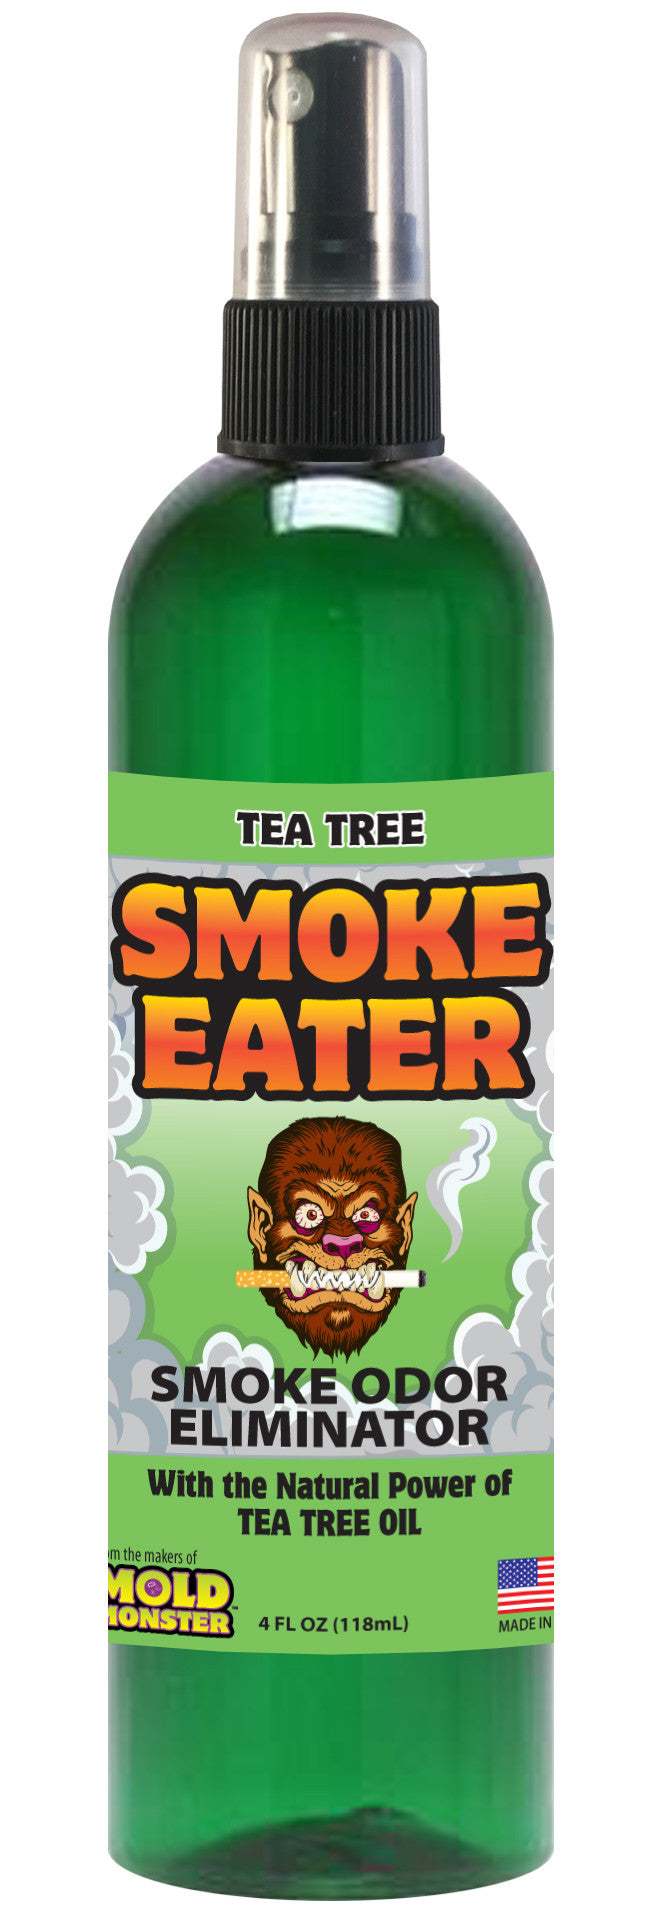 Smoke Eater - Tea Tree, 4 oz.